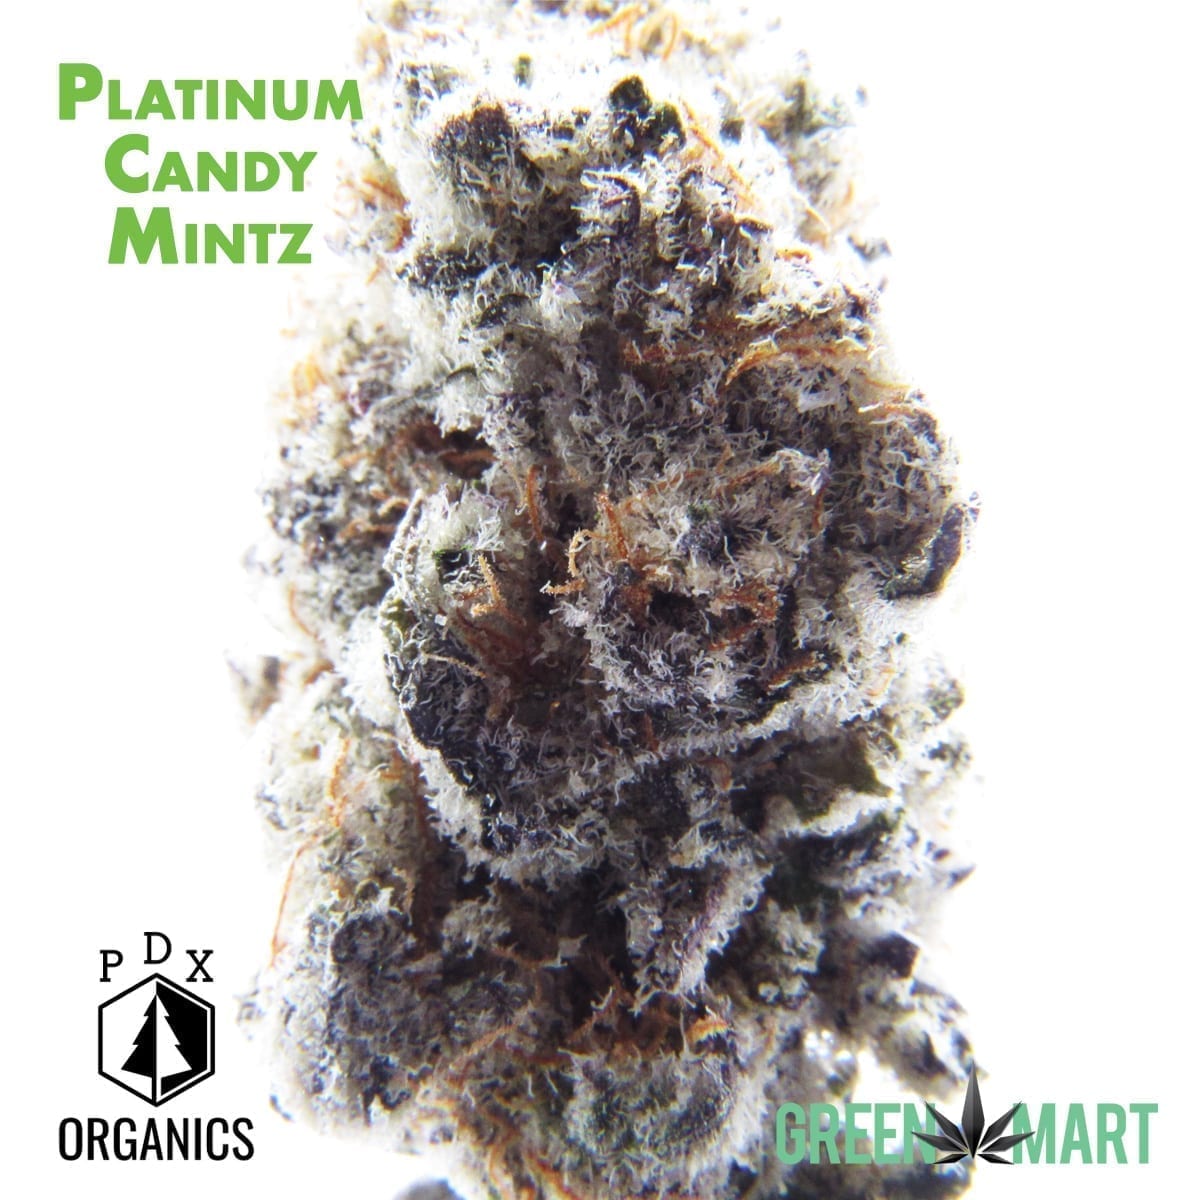 Platinum Candy Mintz by PDX Organics